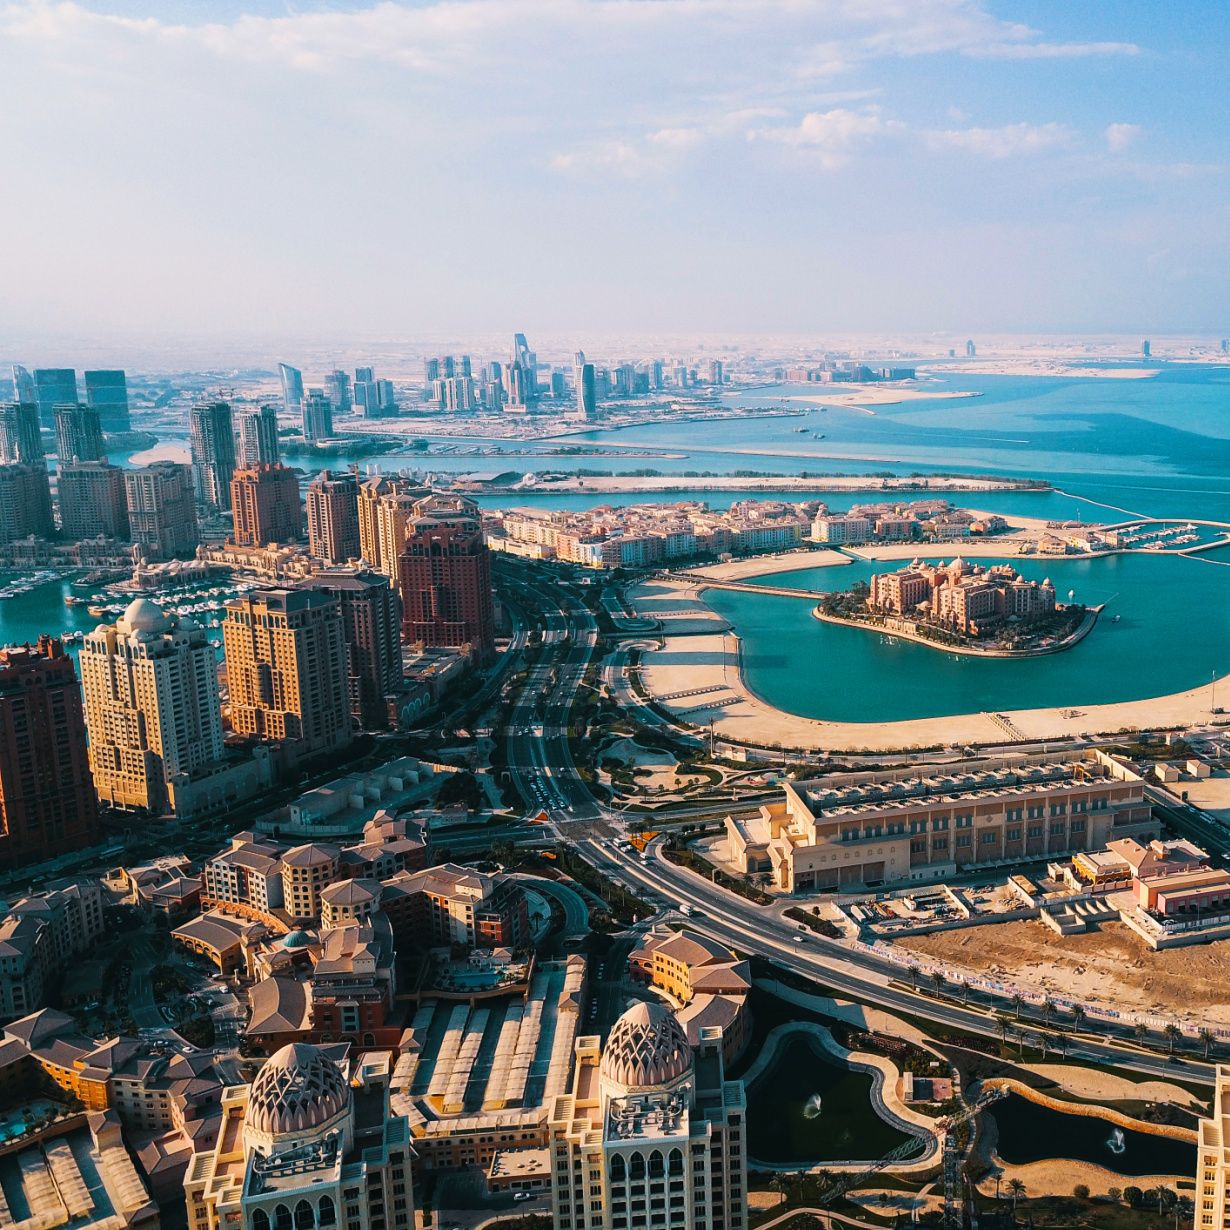 doha skyline with aerial coastal view of vast city